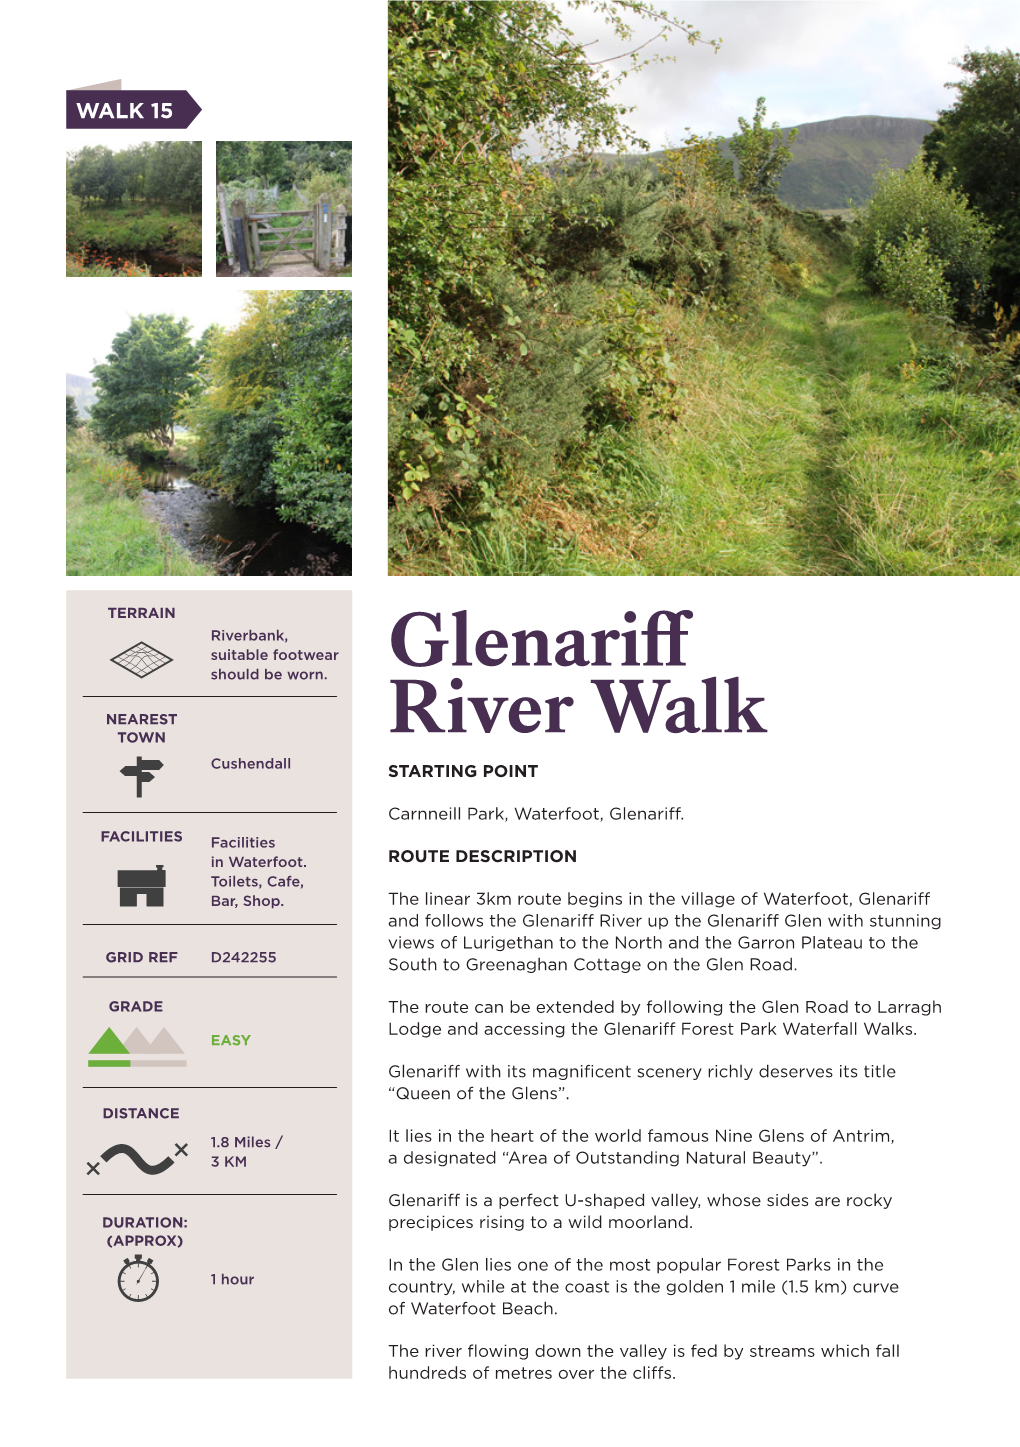 Glenariff River Walk